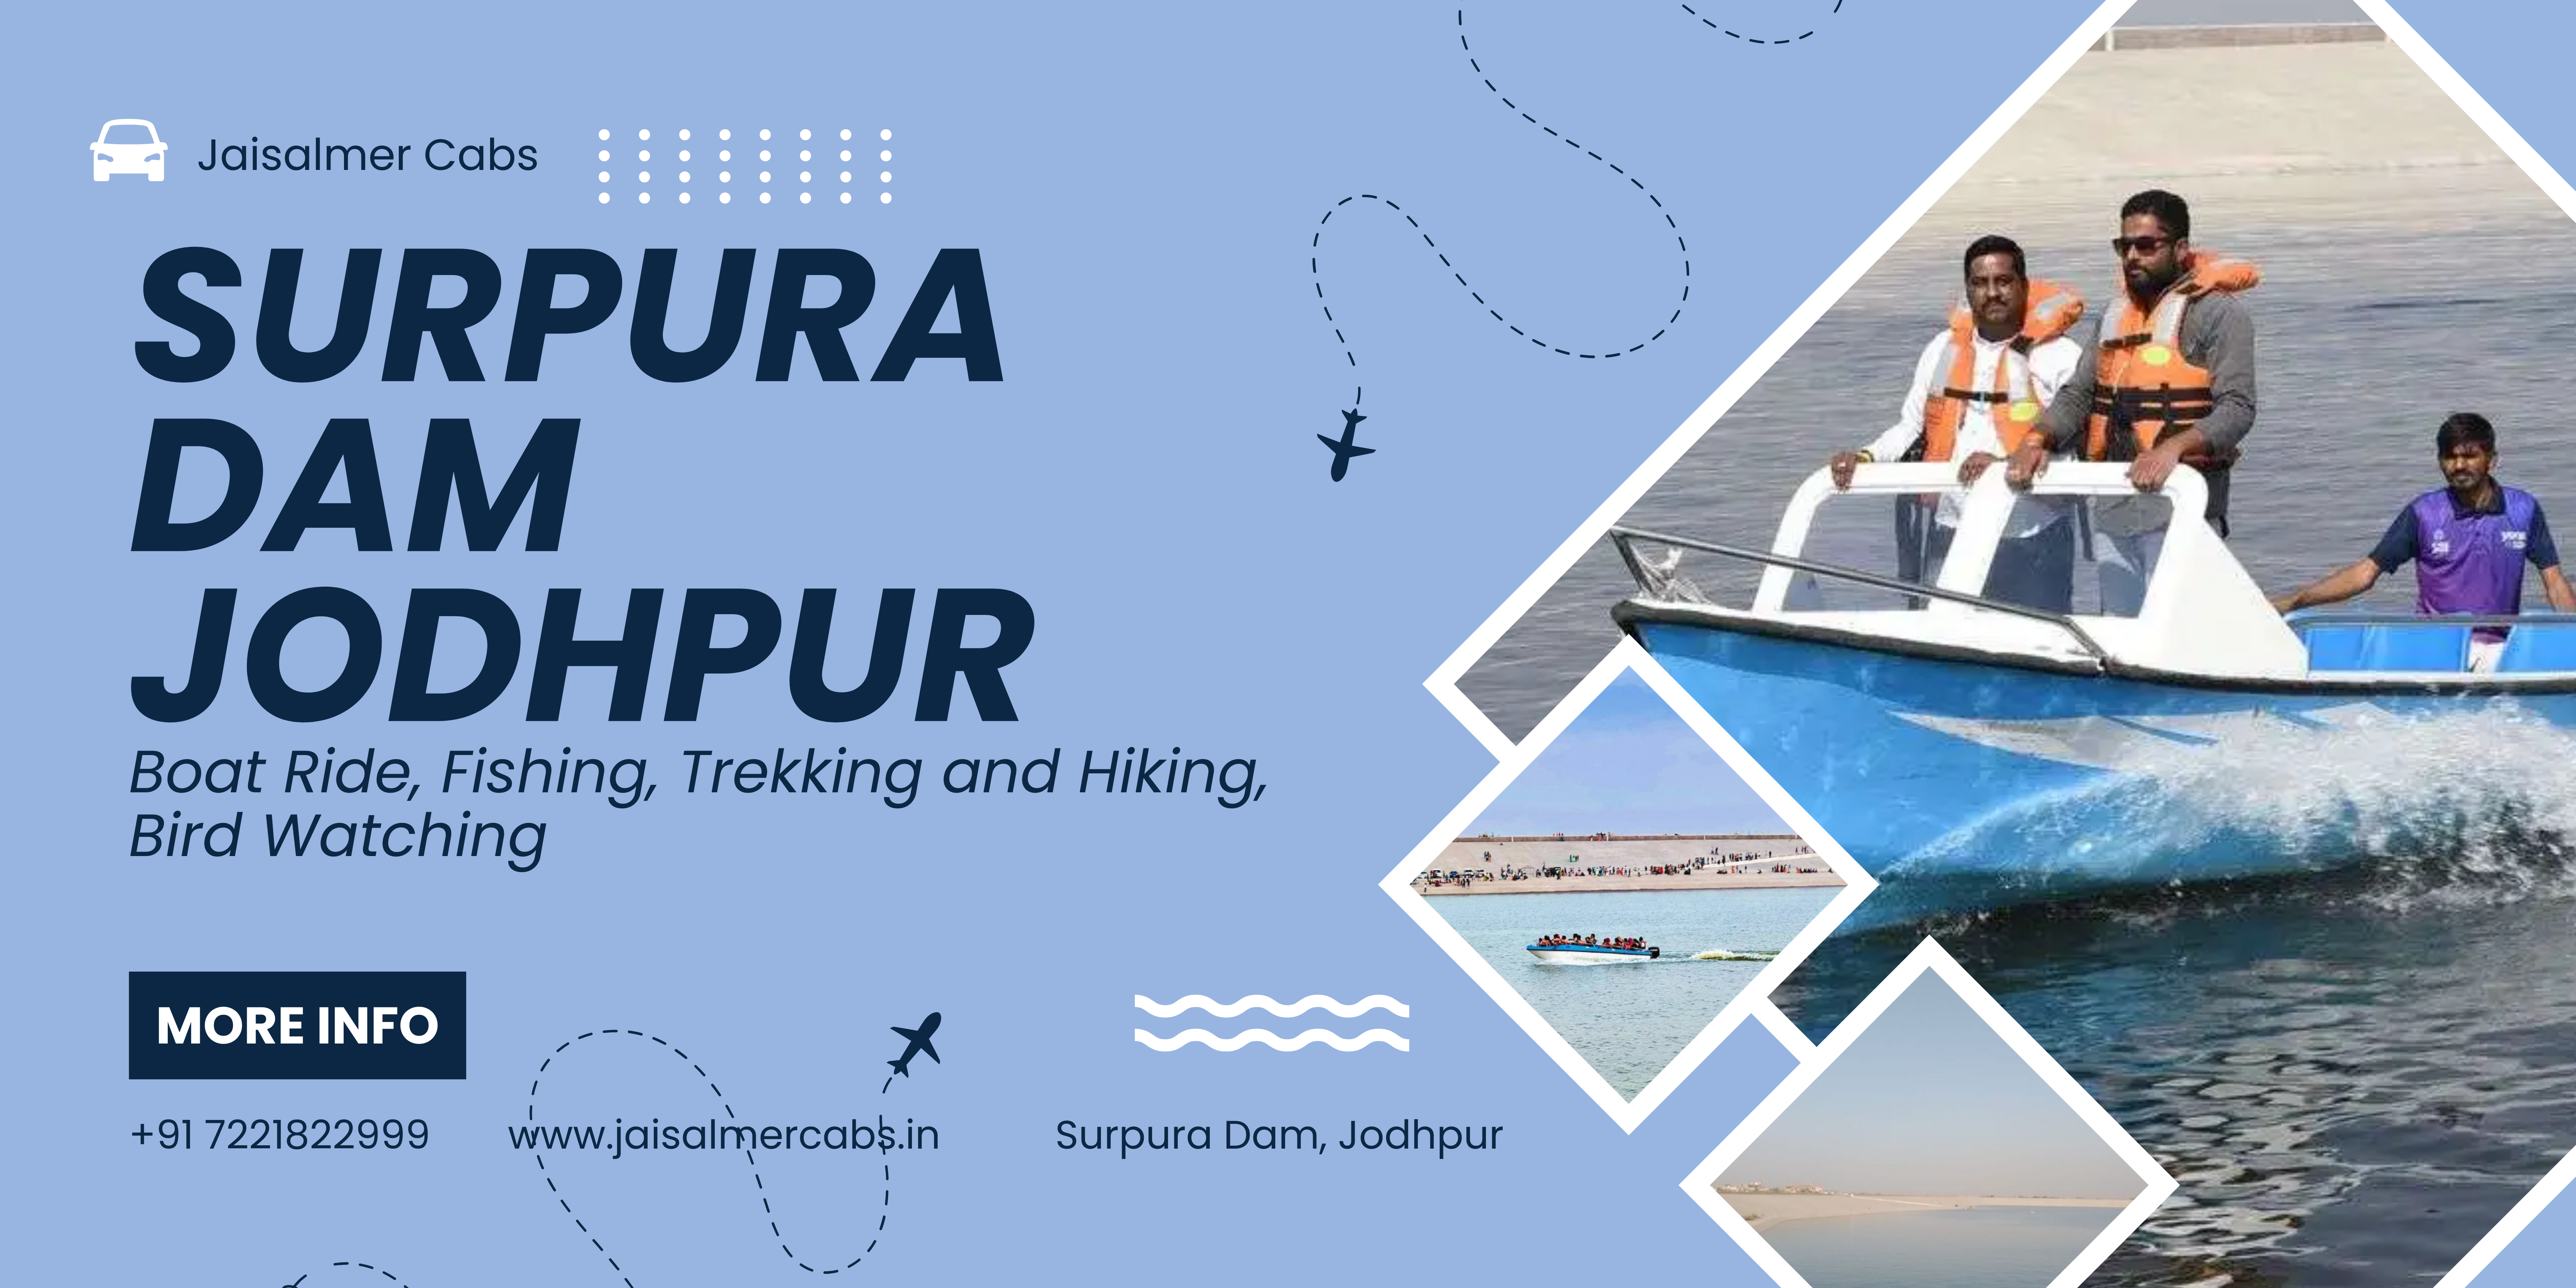 Surpura dam best tourist spot in Jodhpur